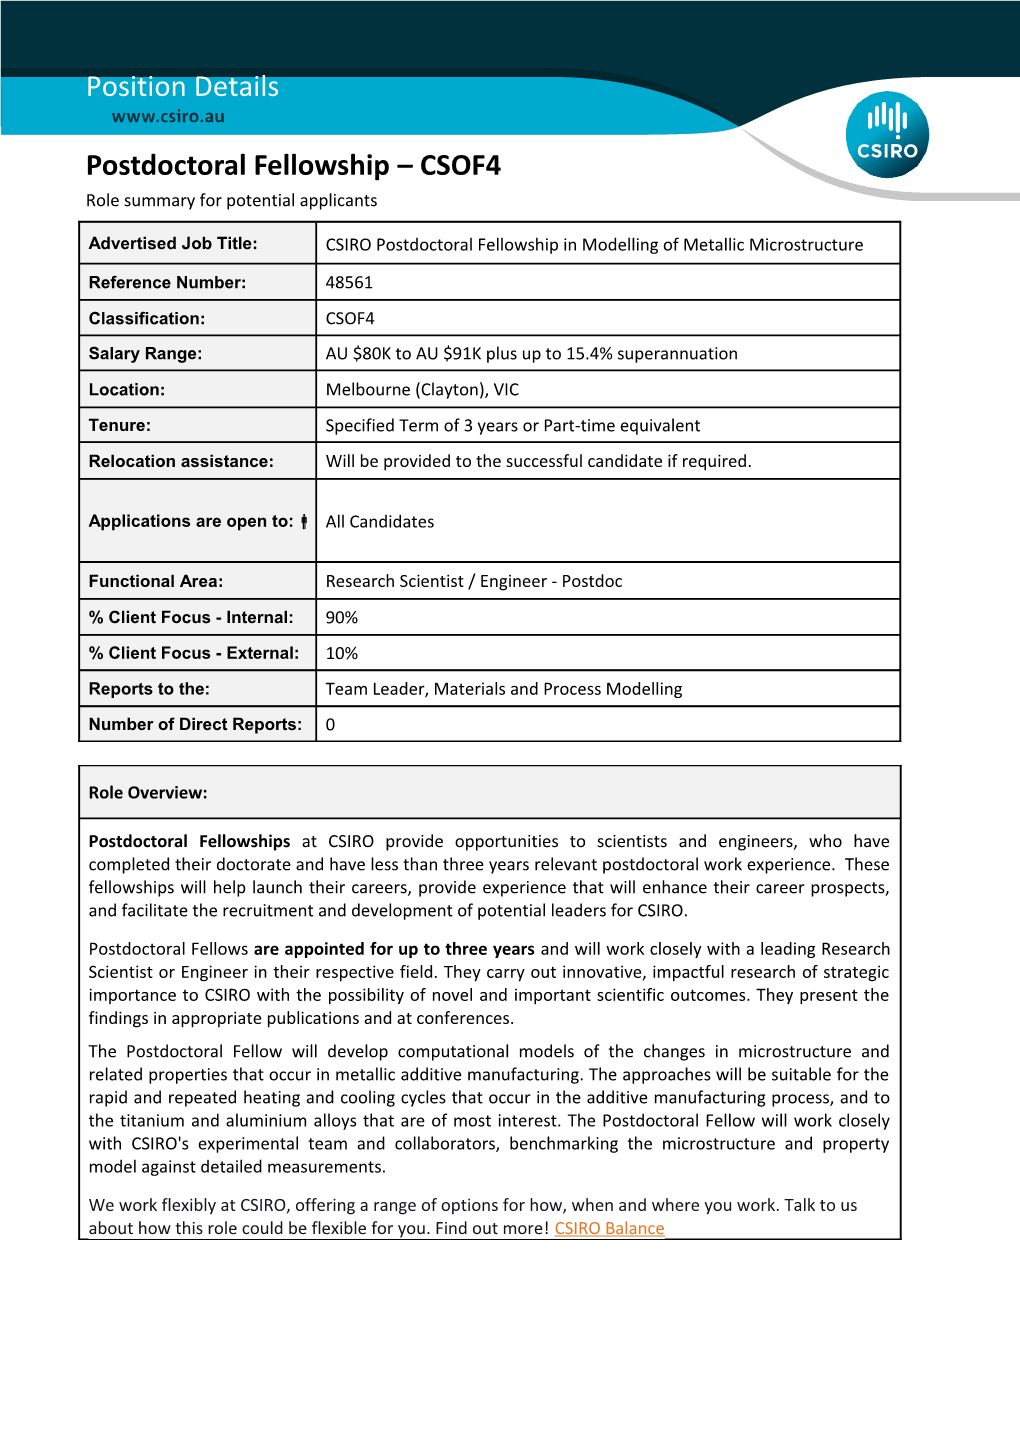 Position Details - Postdoctoral Fellowship - CSOF4 s2